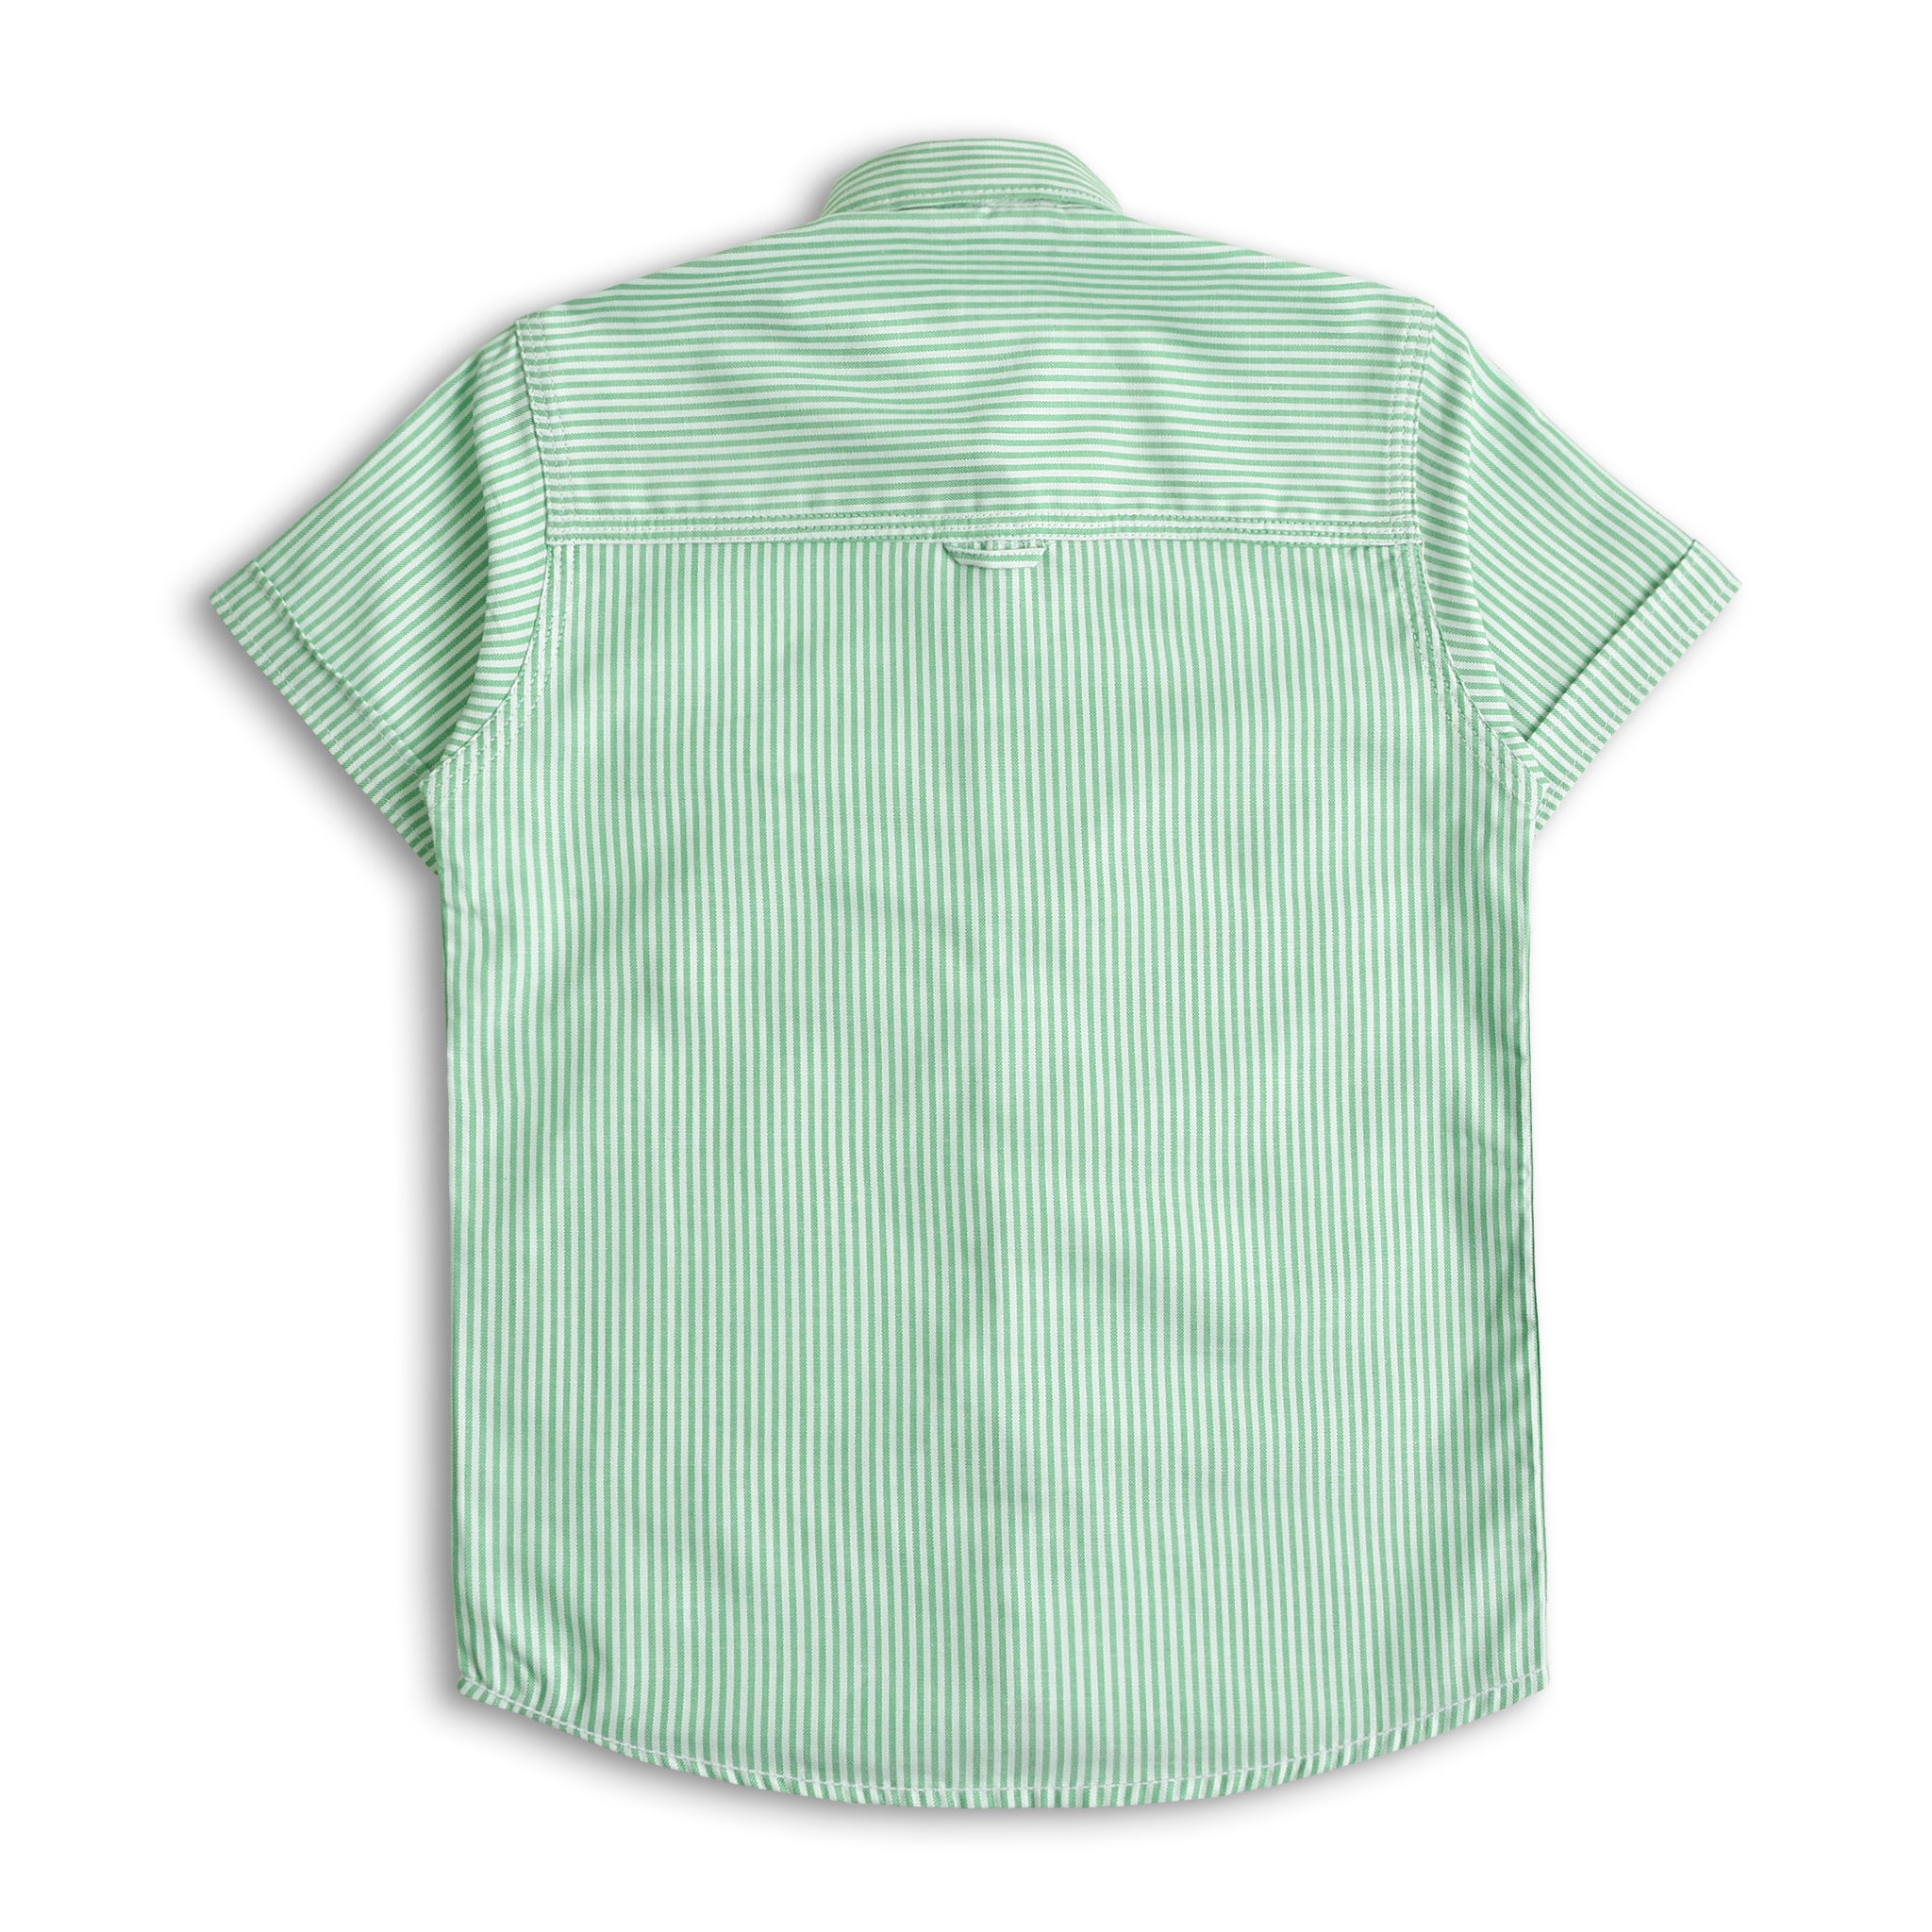 Pastel Green Striped Shirt